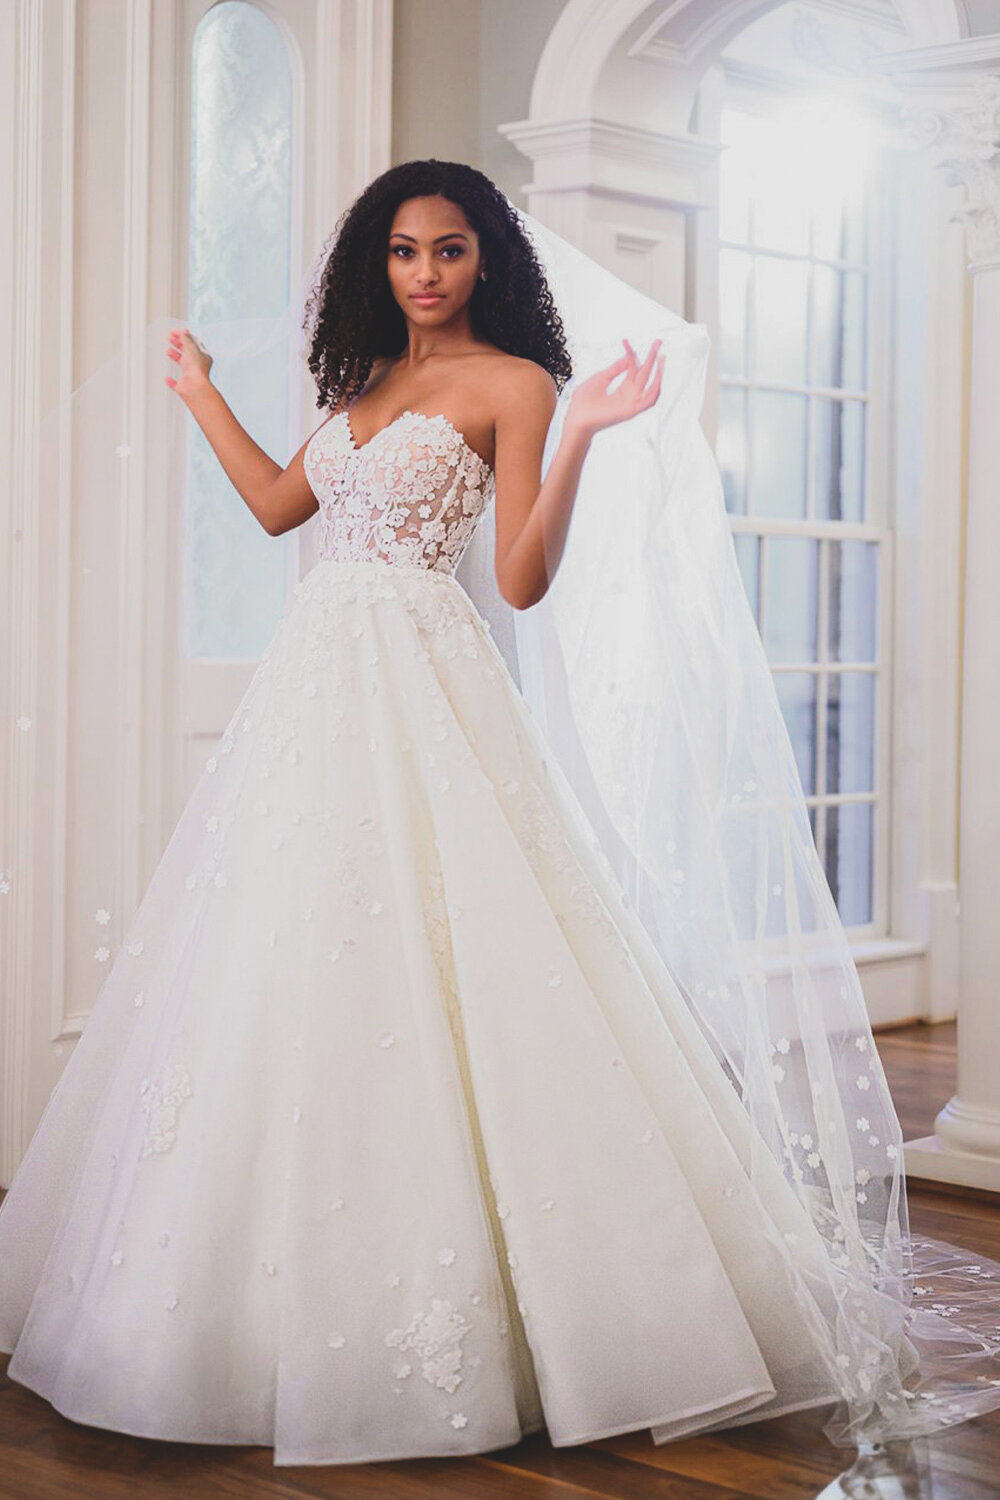 Luxury castle princess Ball Gown White Wedding Dresses Long Sleeve Lace  Applique Boat Neck Bridal Dress